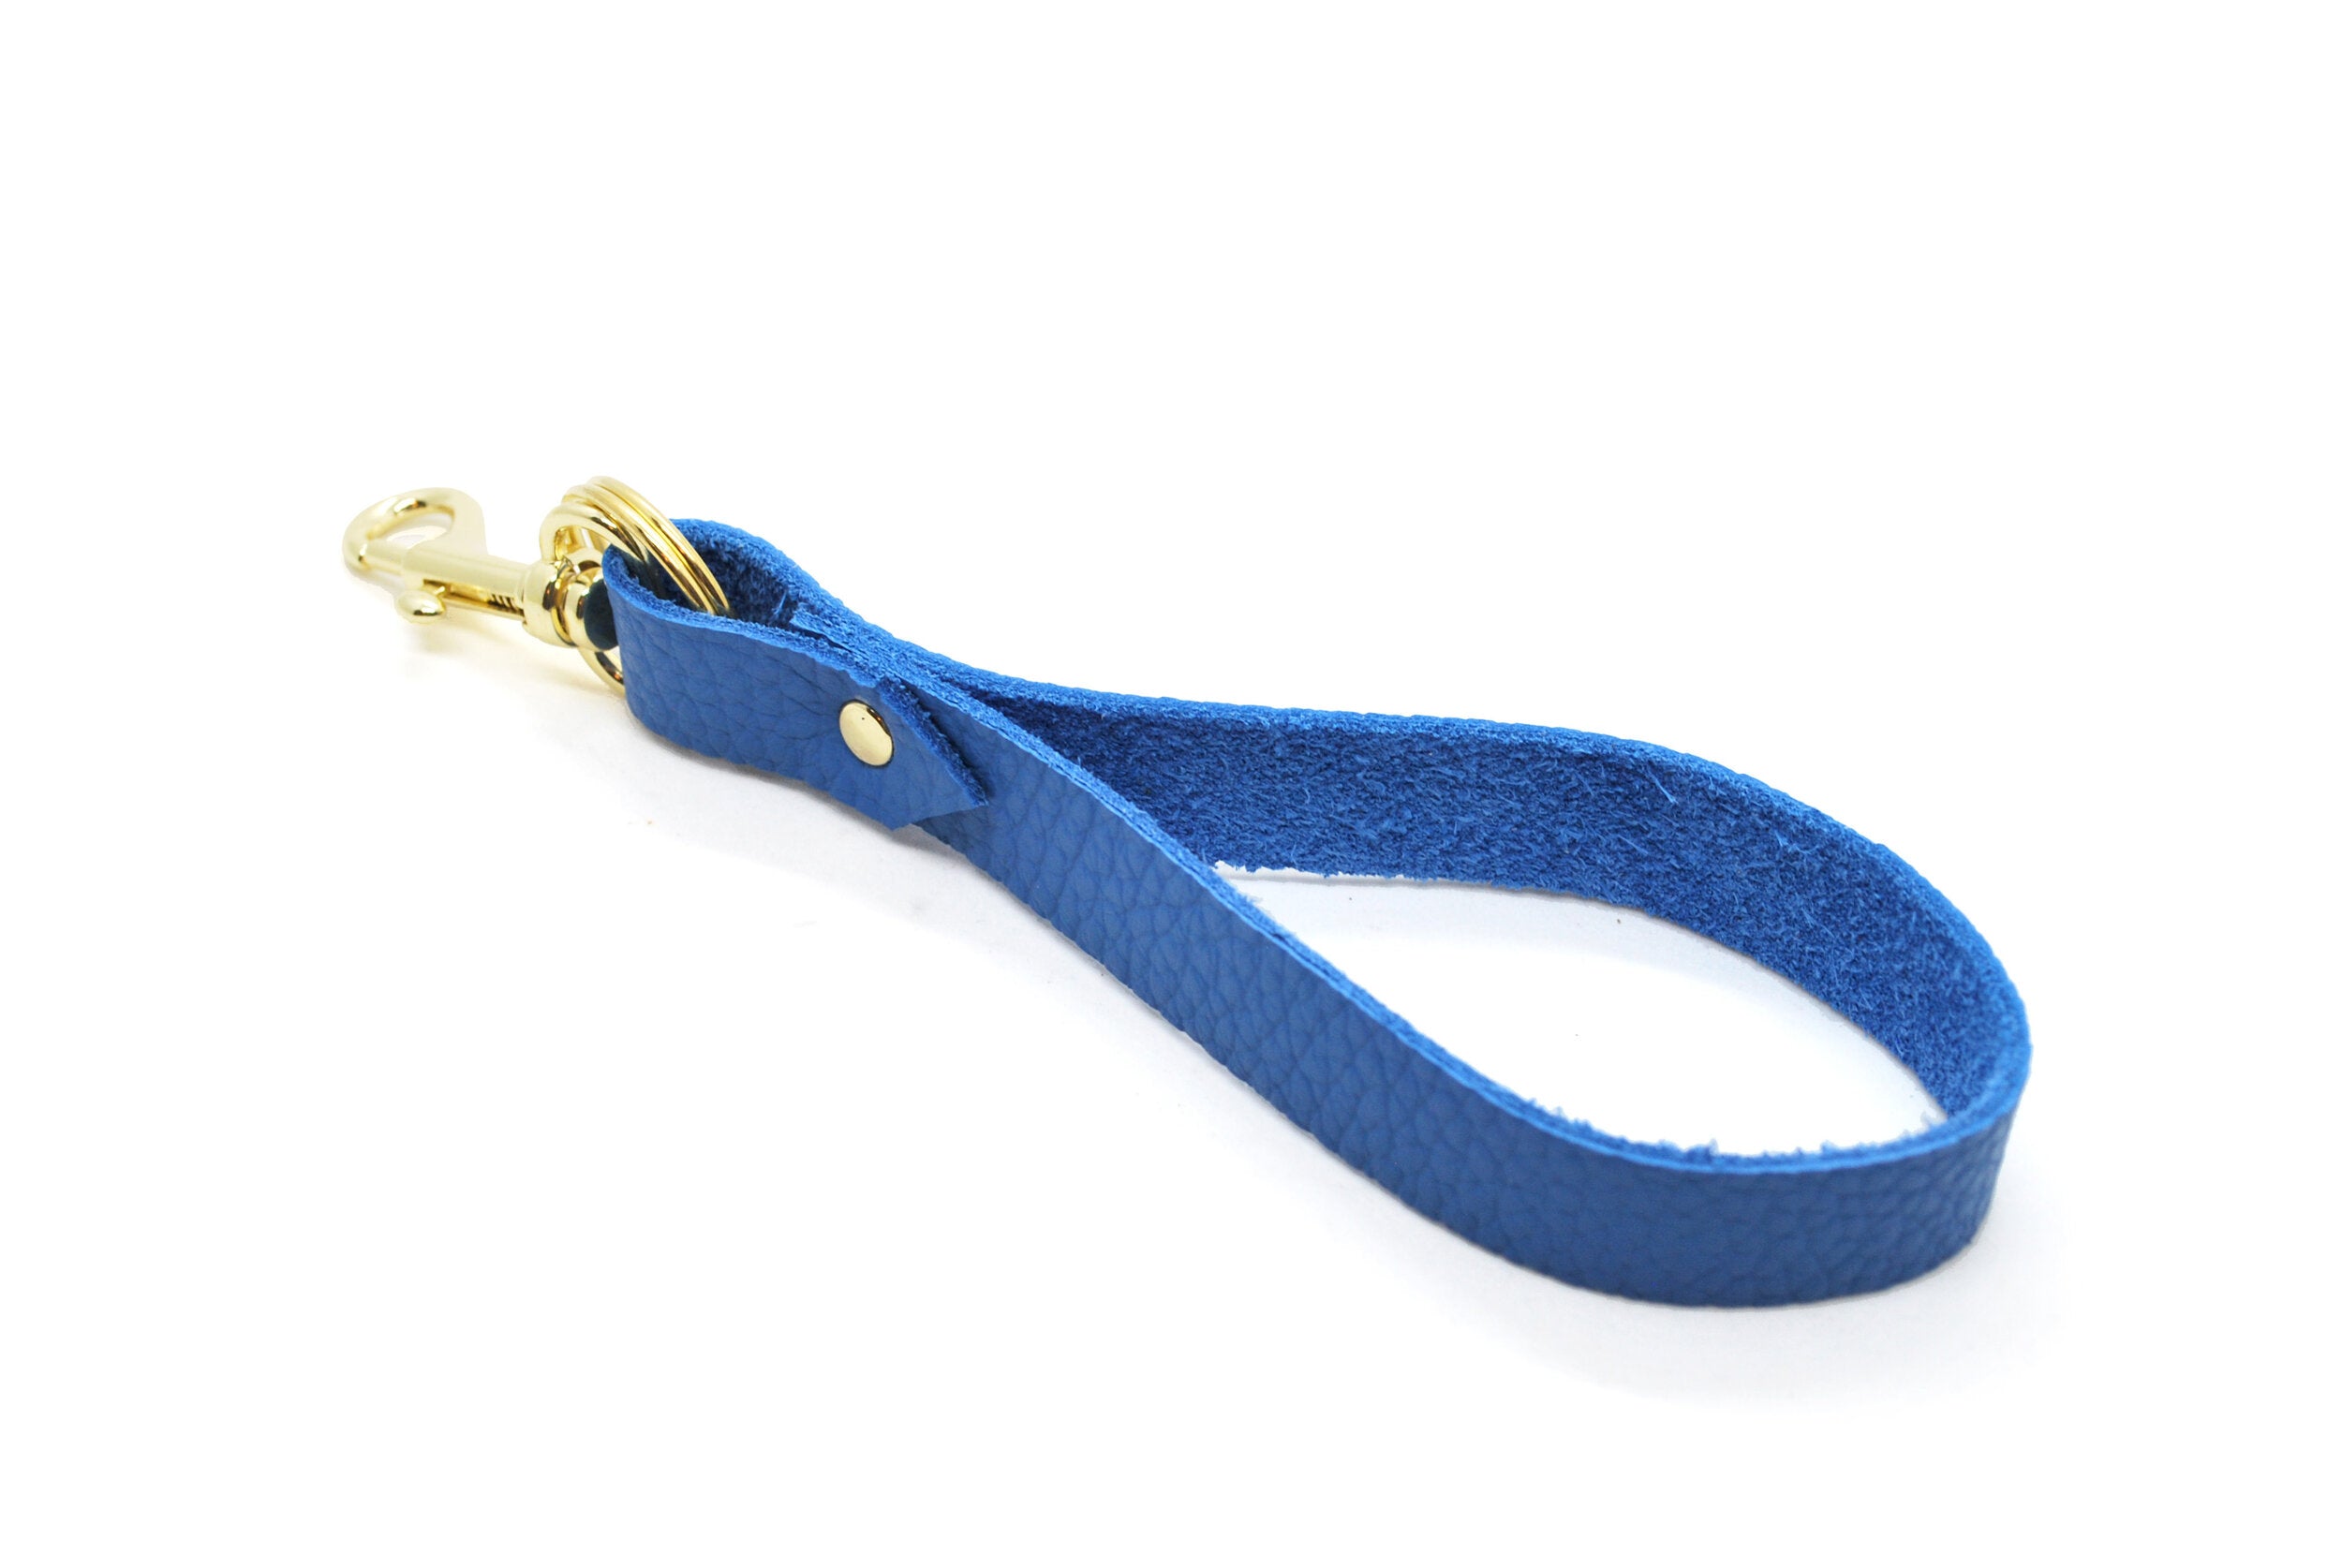 third anniversary gift wrist loop keychain in matisse blue with gold hardware.